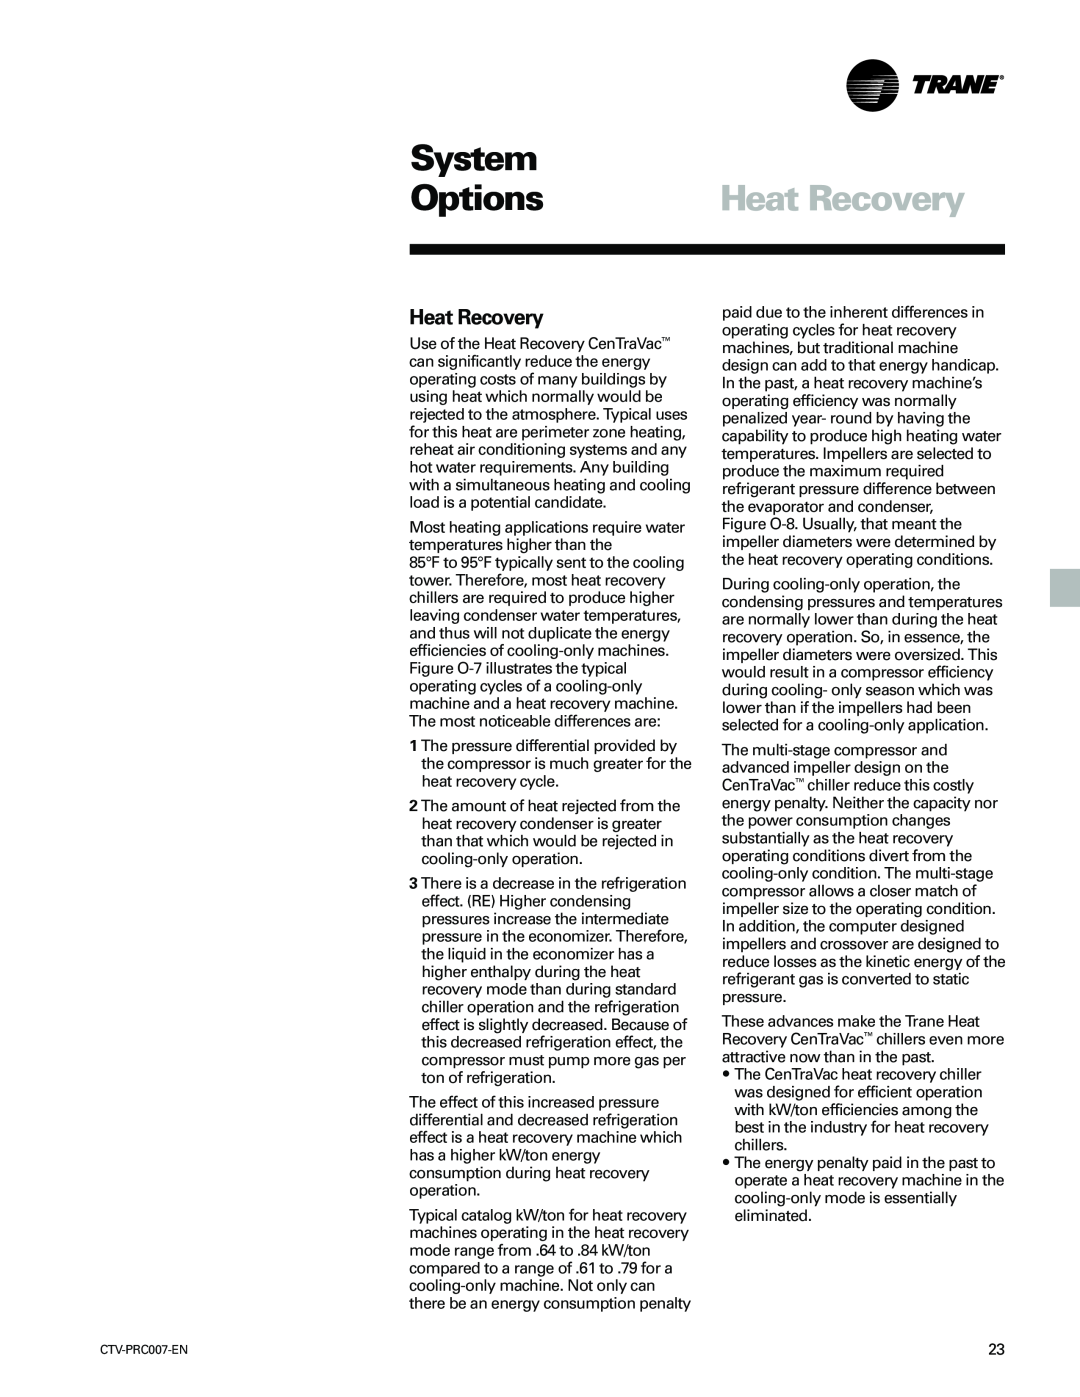 Trane ctv-prc007-en manual Options, System, Heat Recovery 